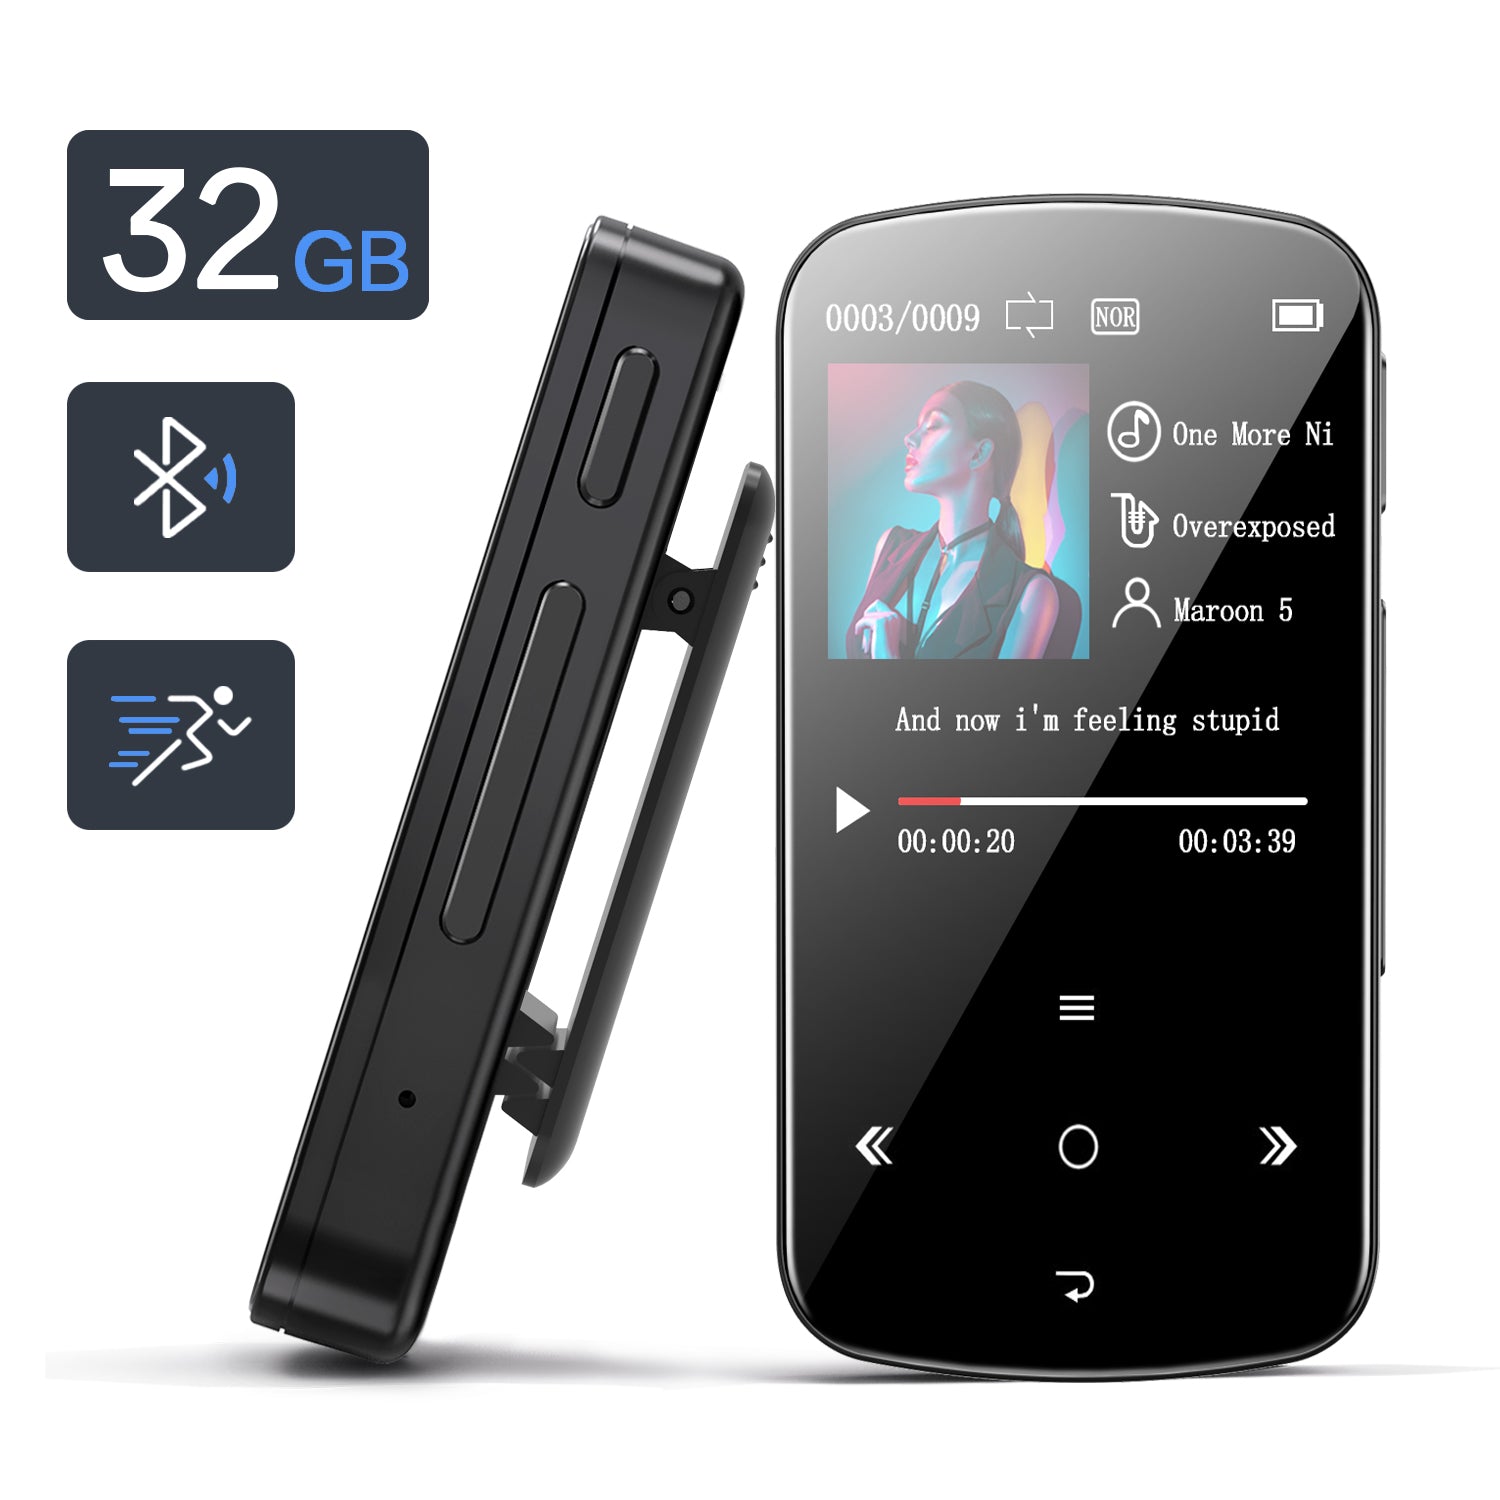 Doosl MP3 Player, 32GB Sports MP3 Player with Bluetooth FM Radio, Mini Portable Clip Walkman Player, Smart Touch Button HiFi Audio Player